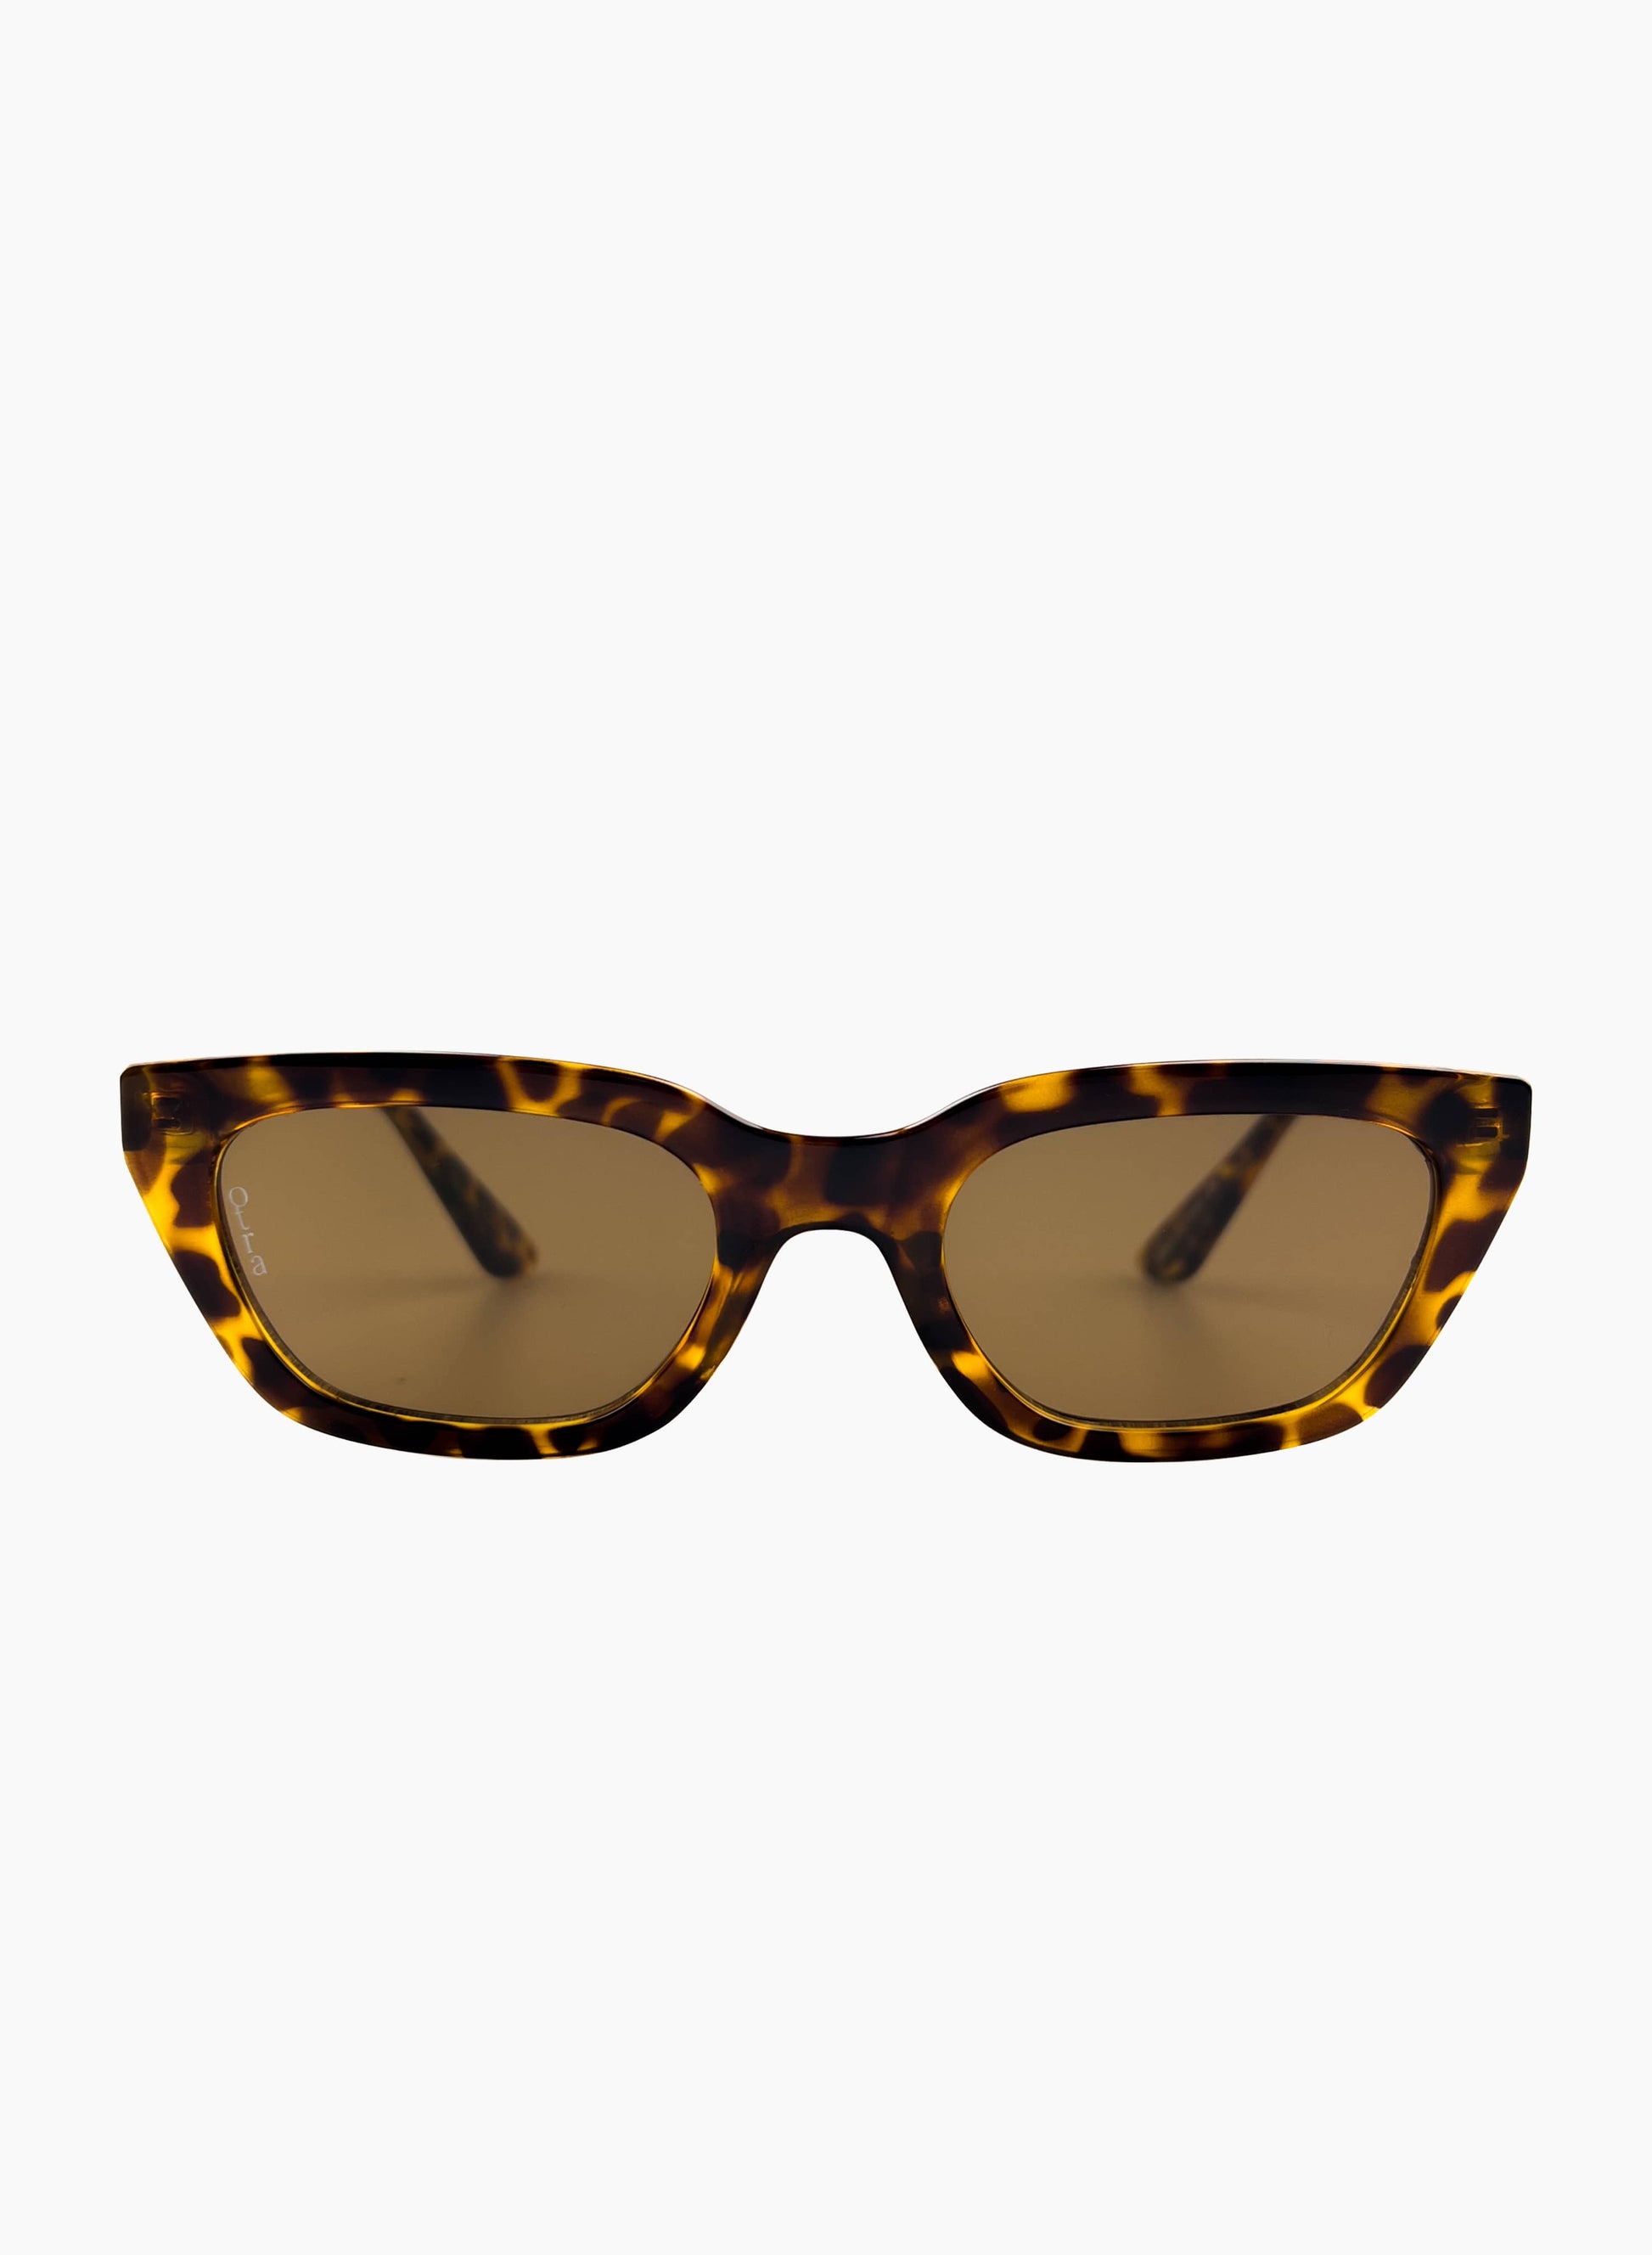 NOVE cateye sunglasses in brown tortoisehelle